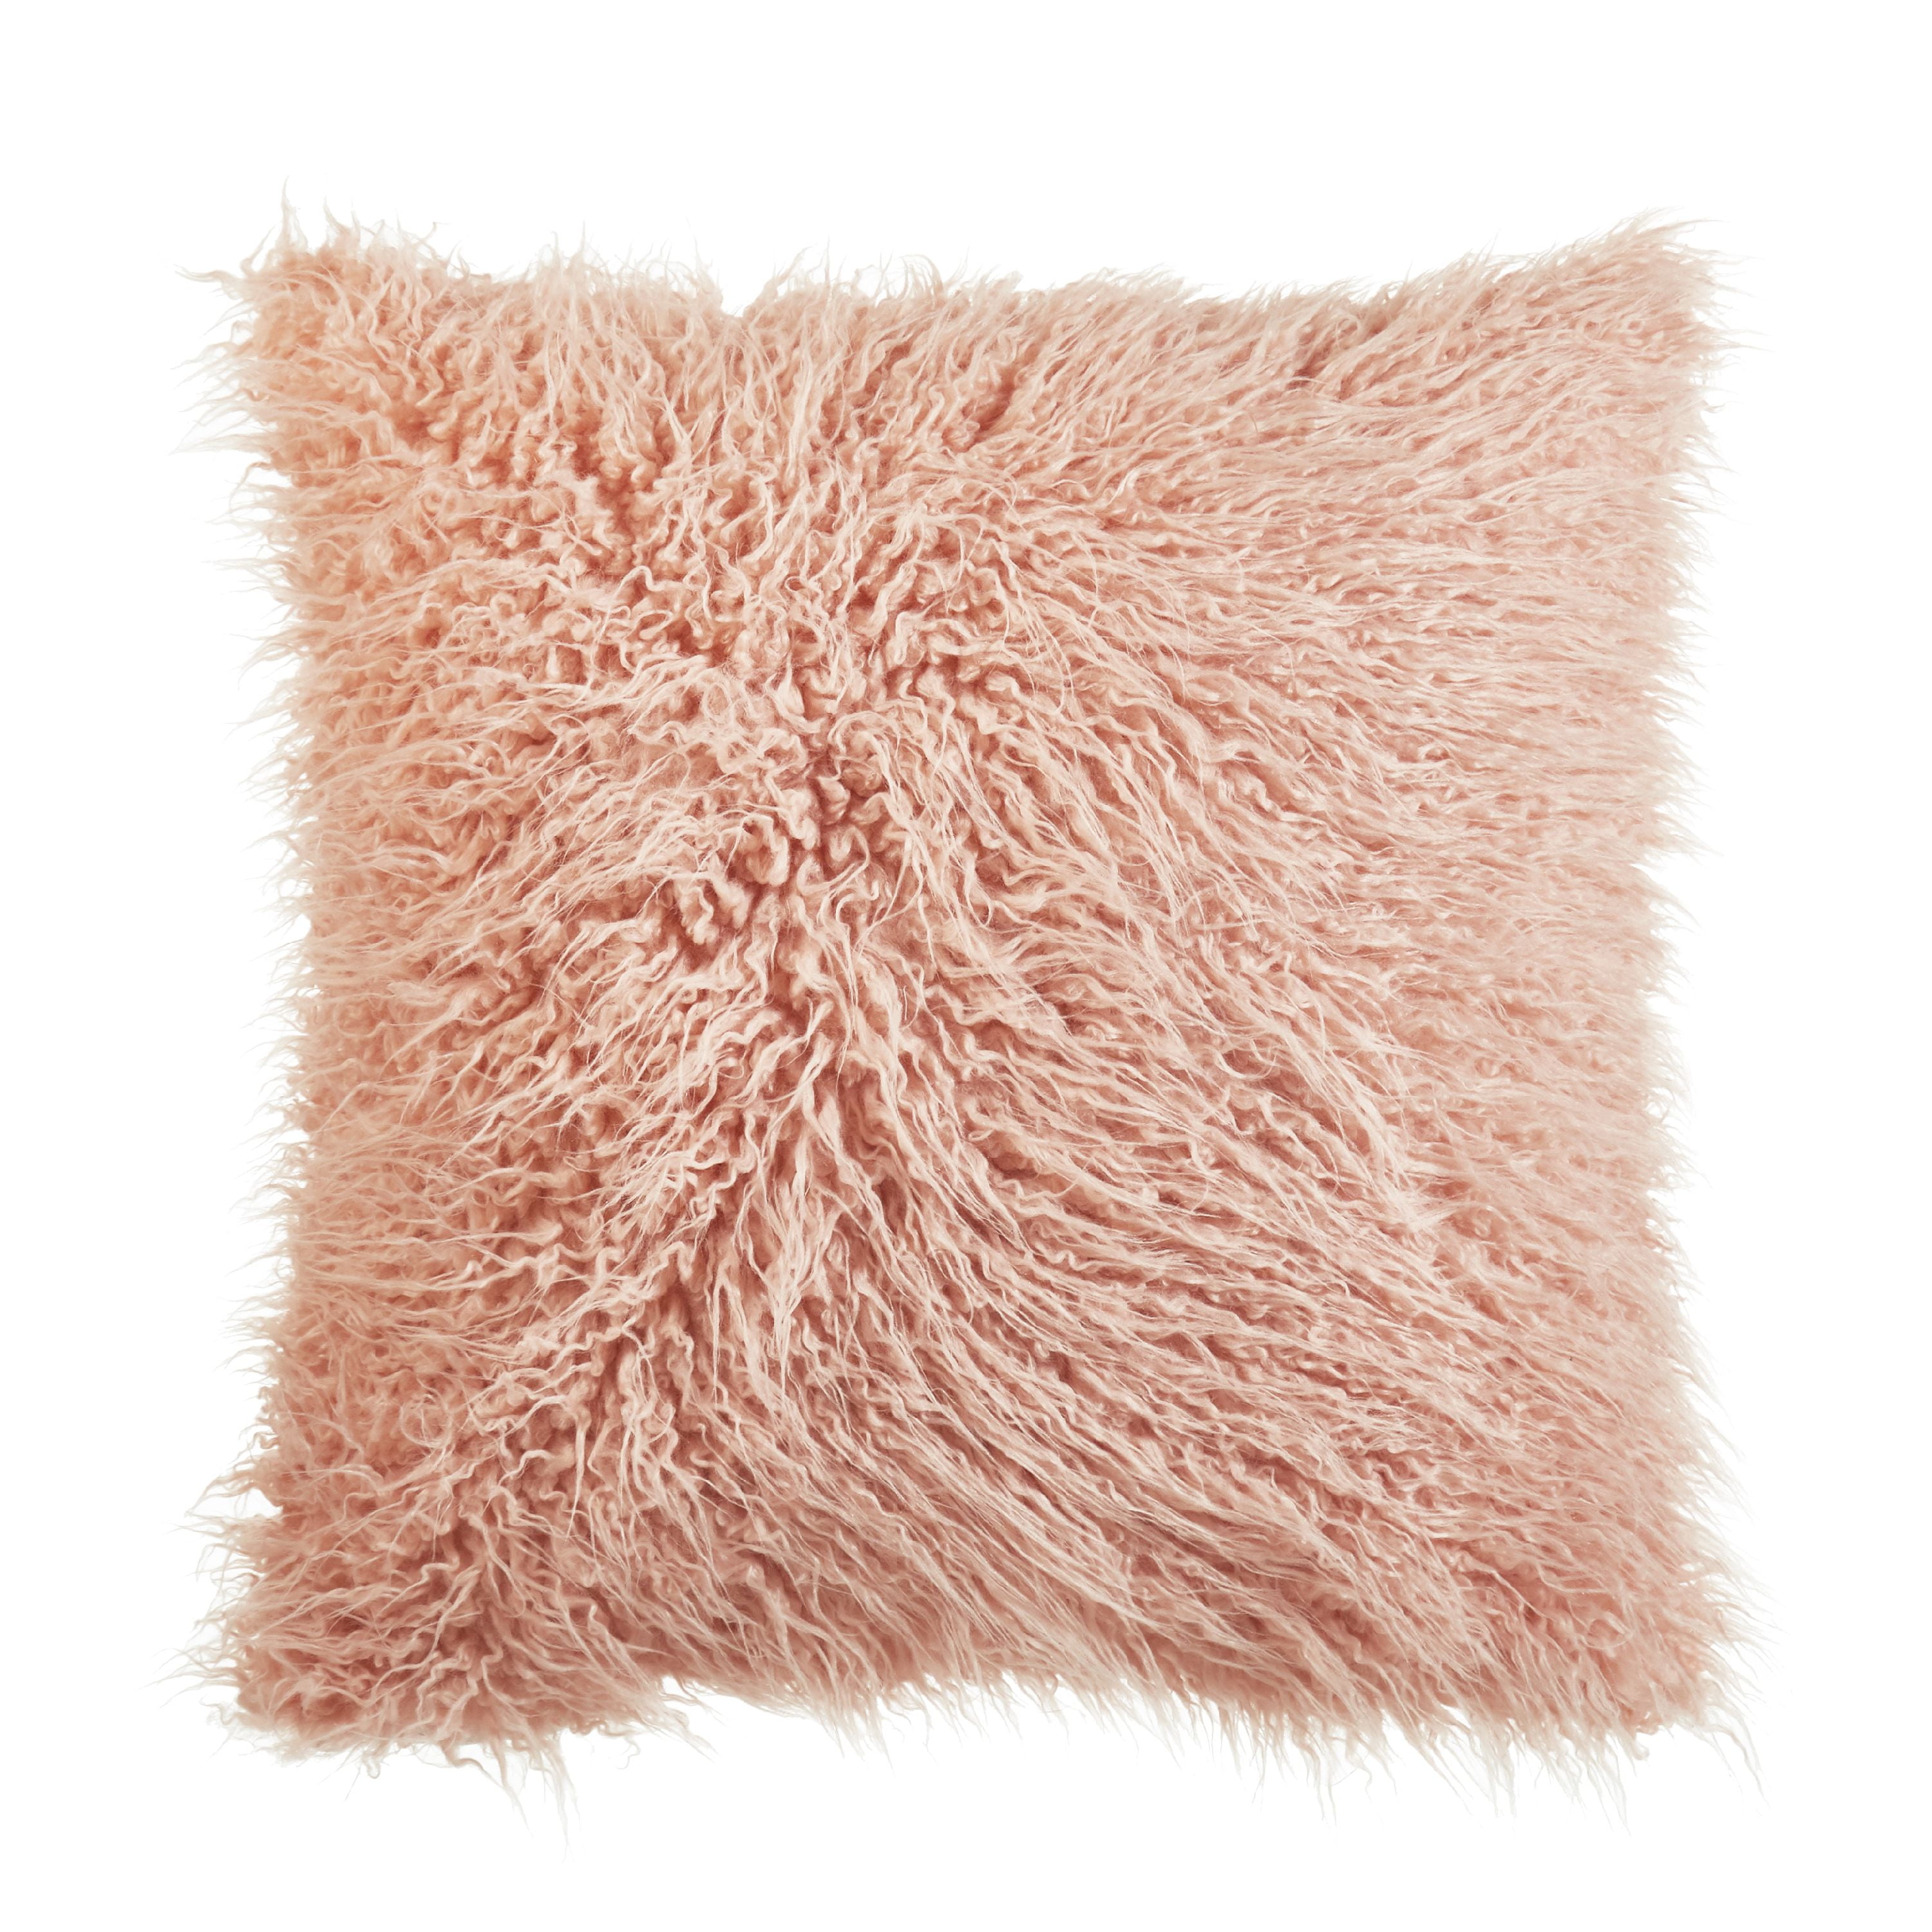 light pink faux fur pillow